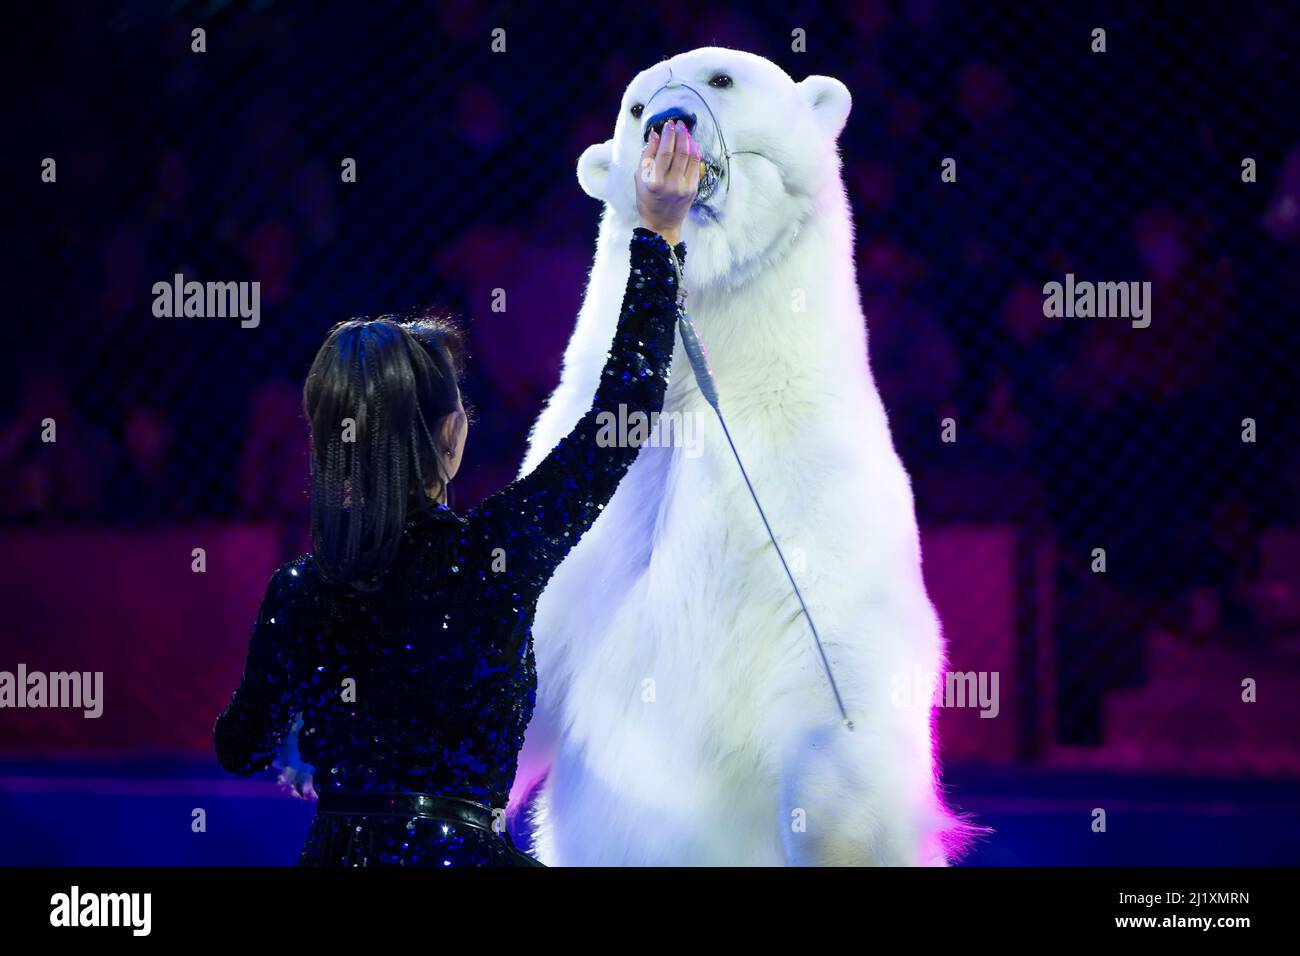 An animal trainer with a polar bear performs at the circus. Circus bear. Stock Photo